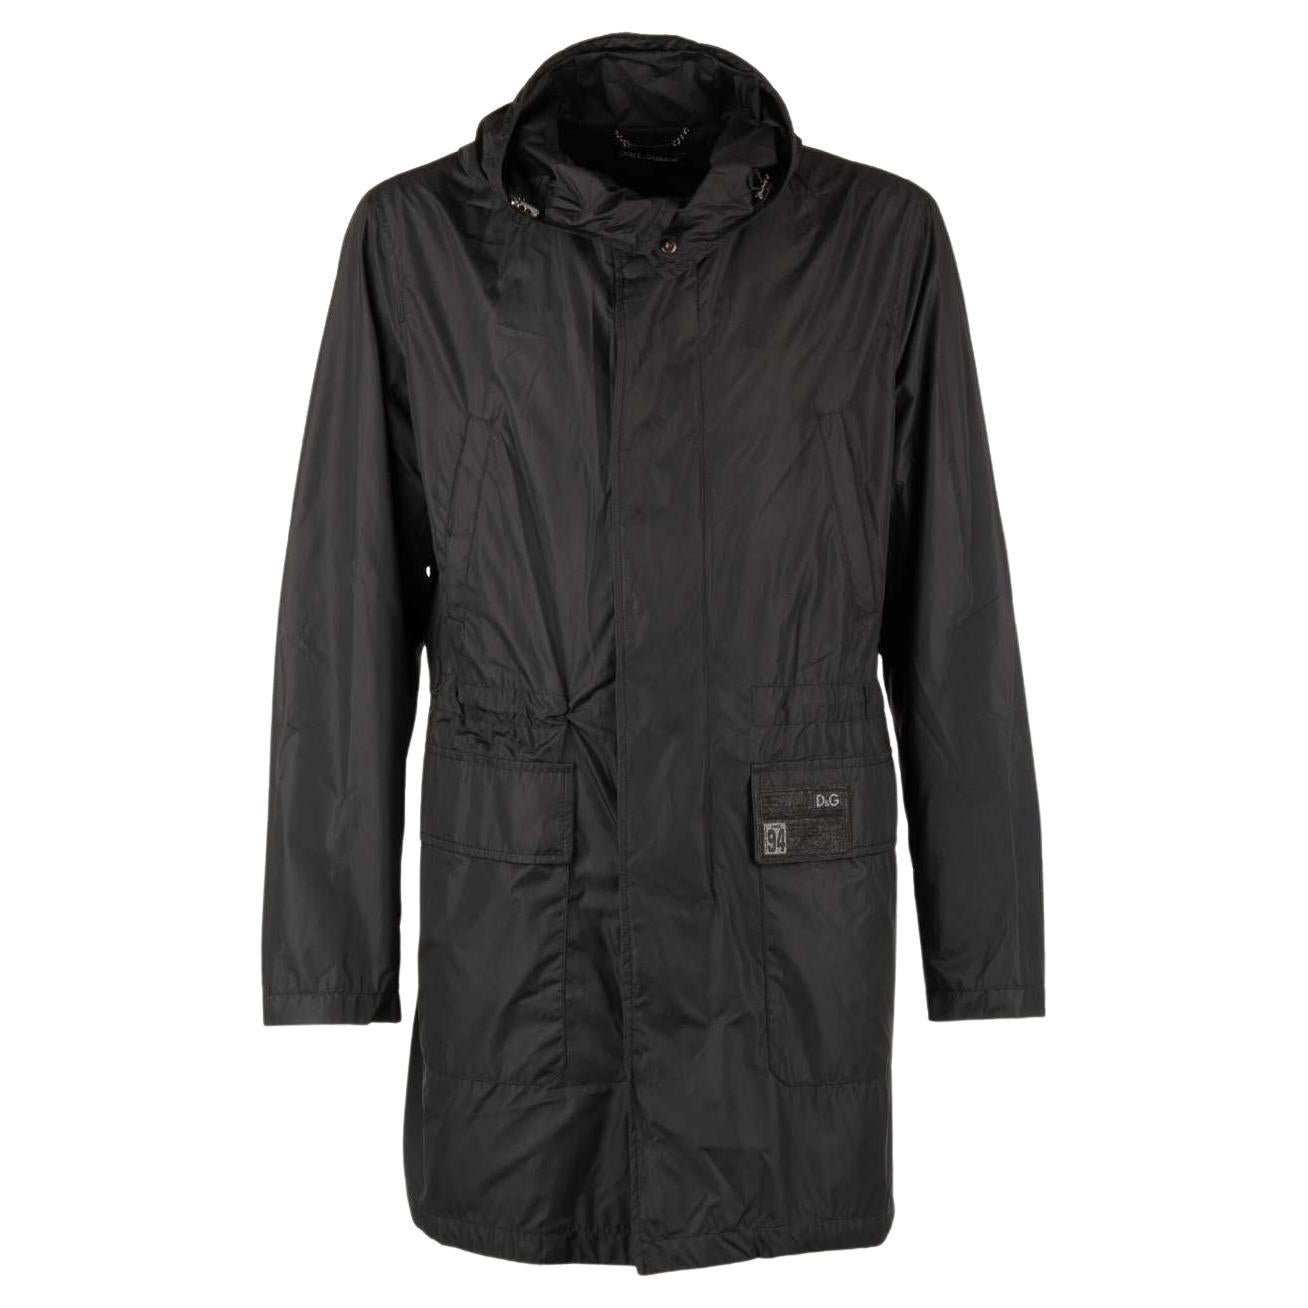 Dolce & Gabbana Light Hooded Rain Parka Jacket with Pockets and Logo Black 48 For Sale